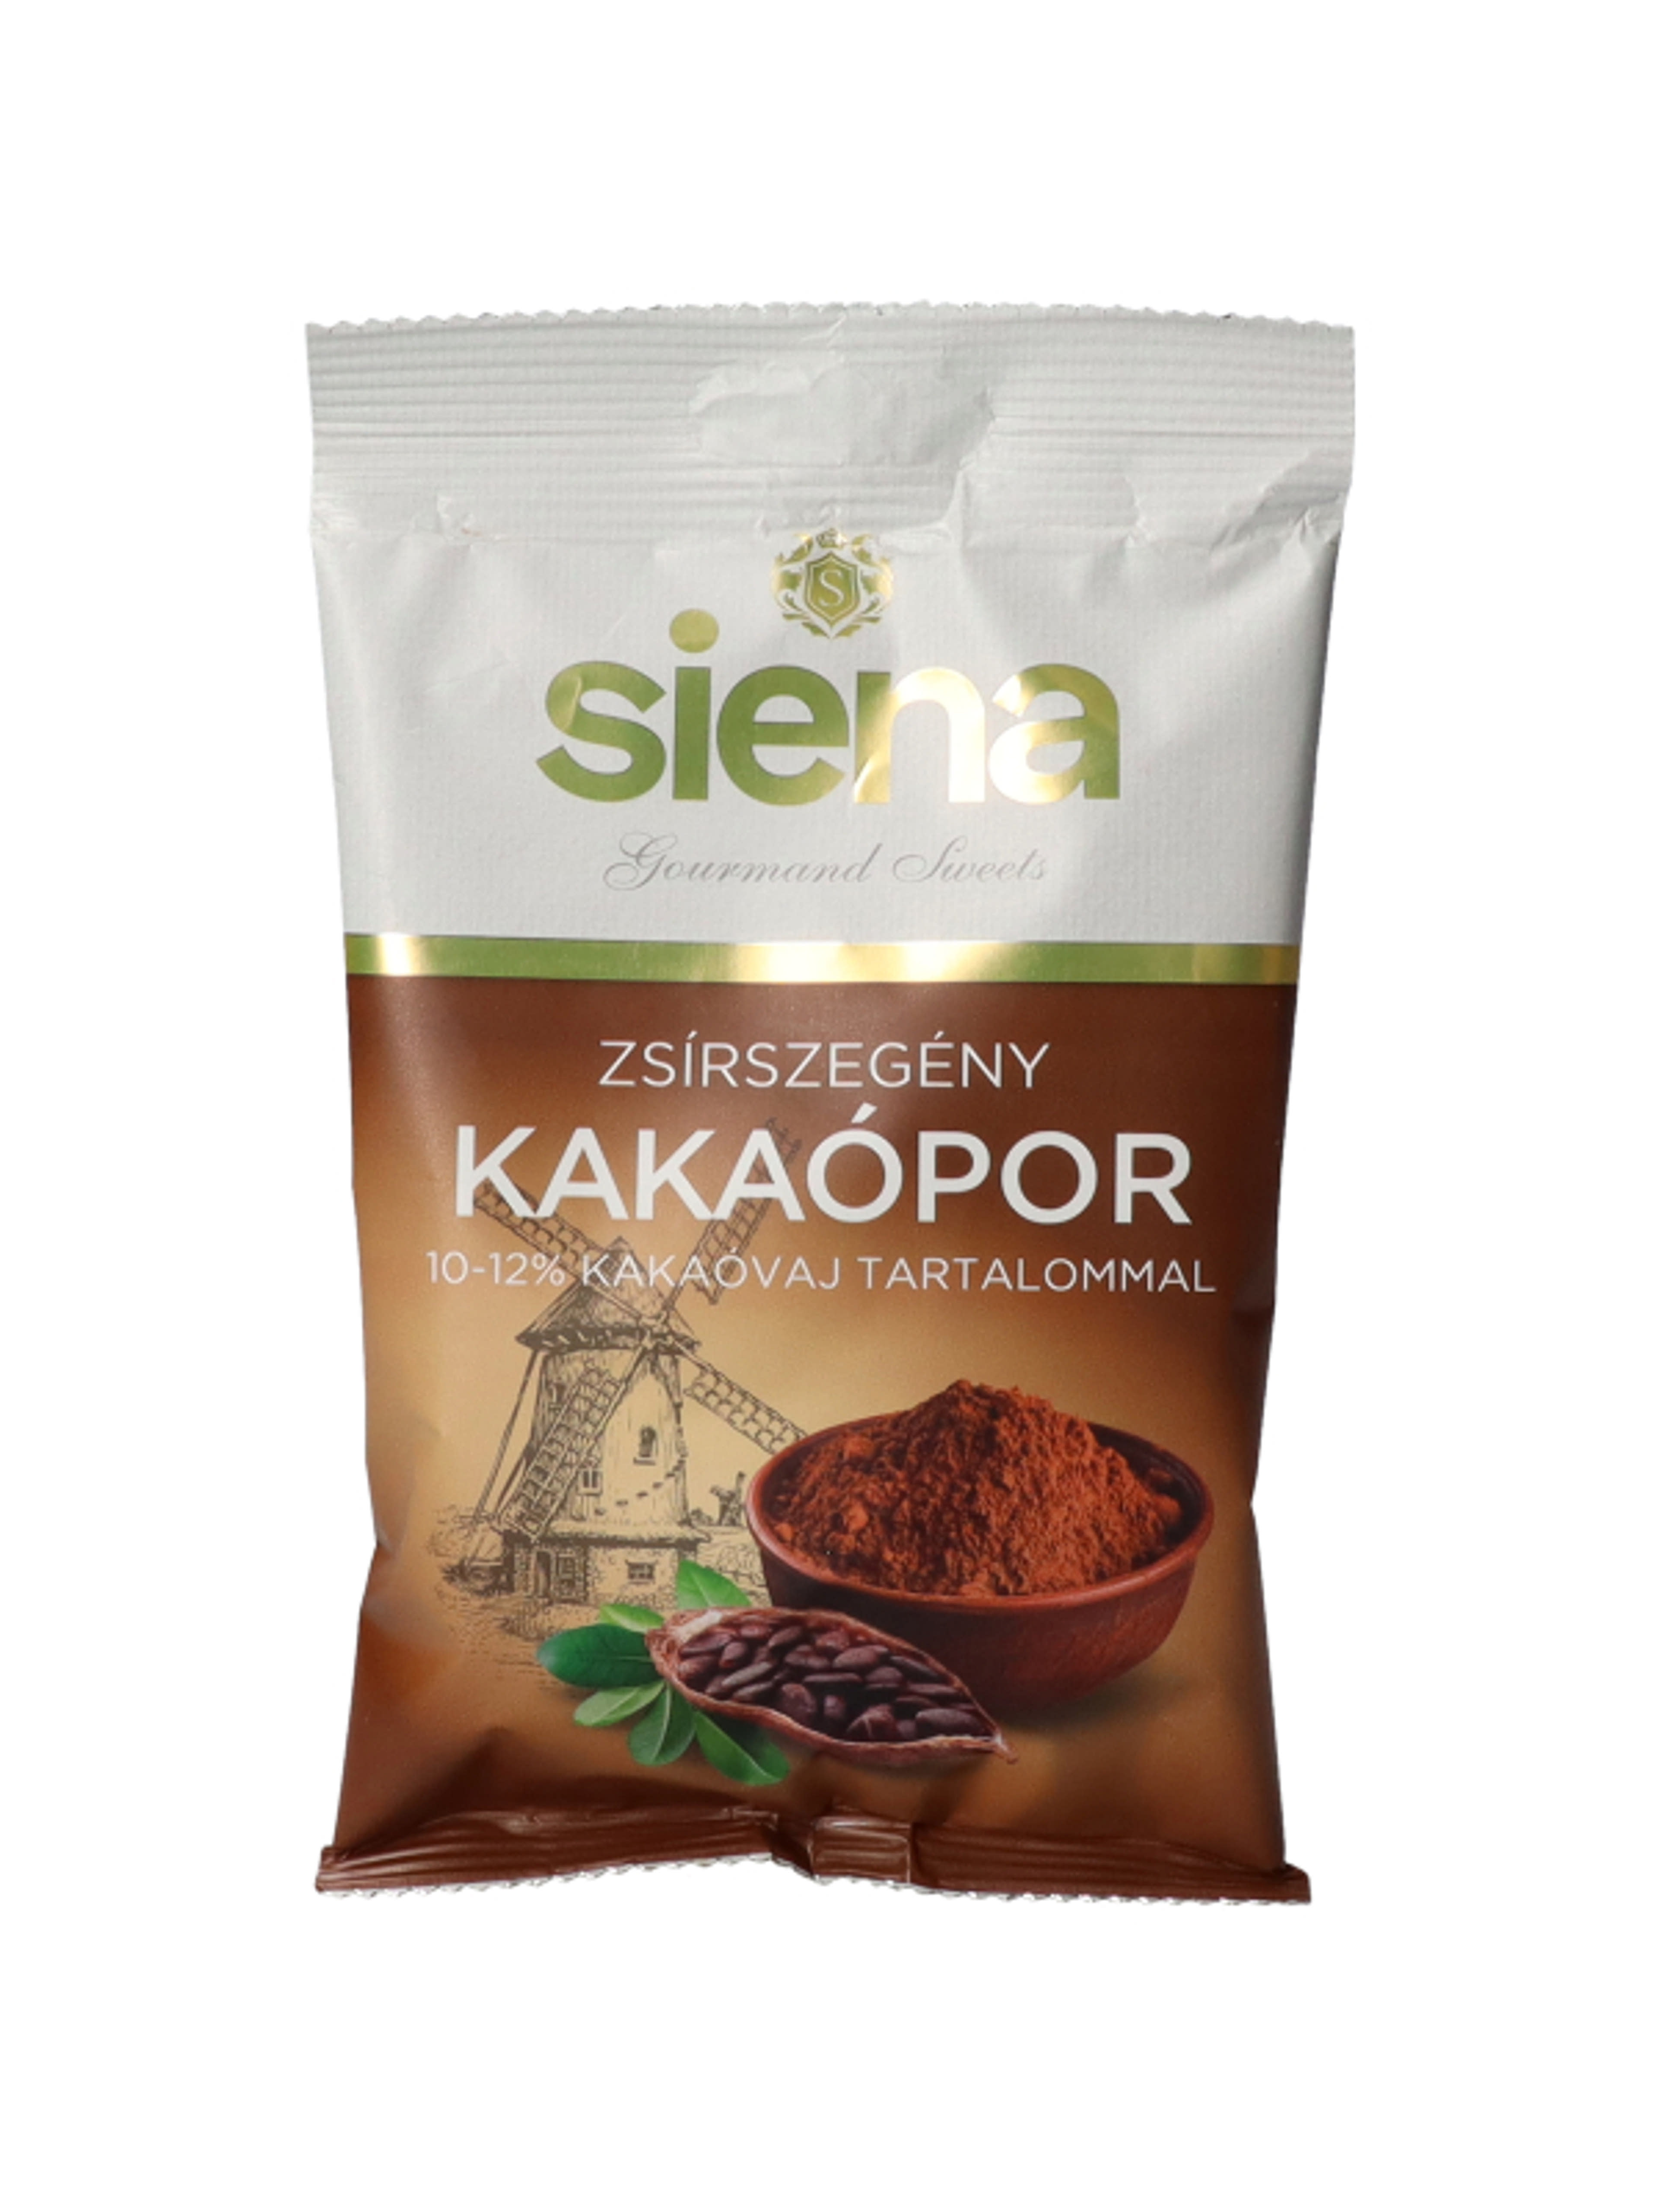 Siena 10-12% Zsírszegény Kakaópor - 75 g